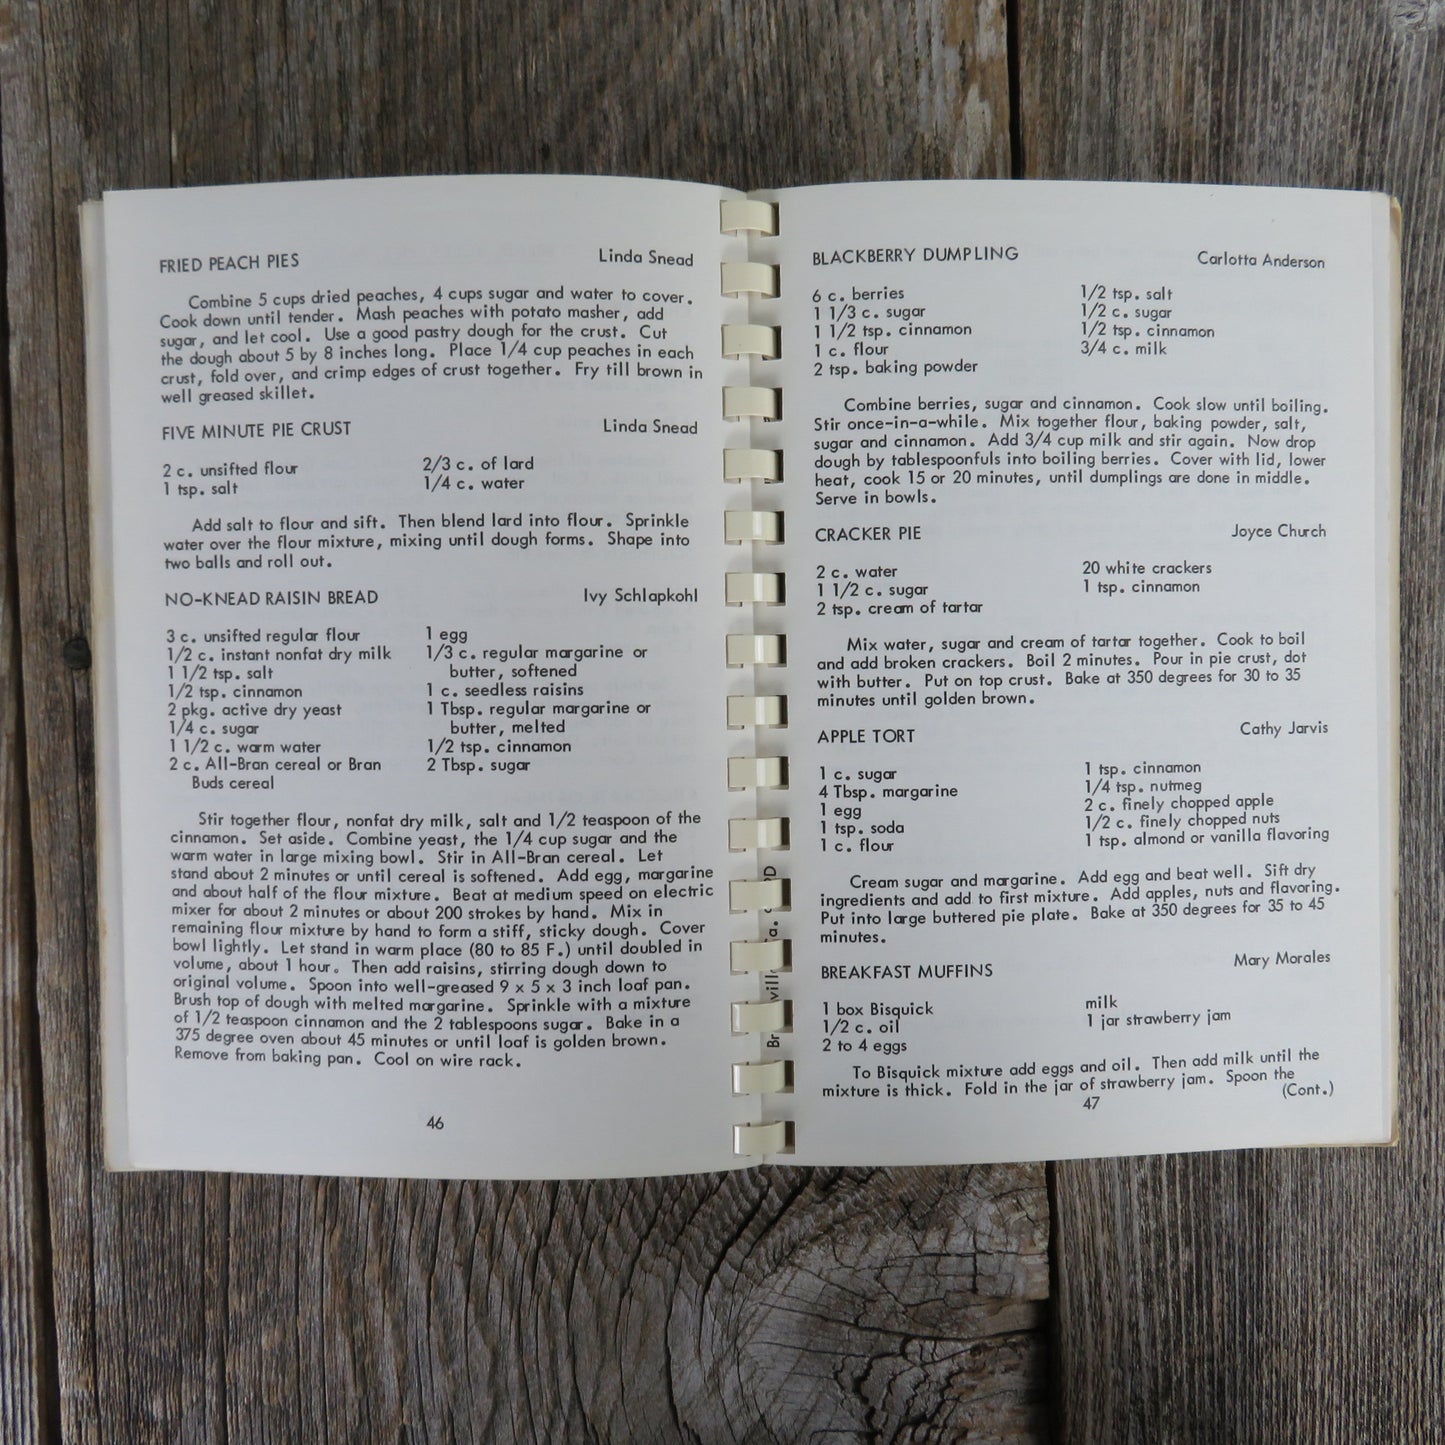 Vintage California Cookbook Bridgeville School Humboldt County Favorite Recipes From Our Best Cooks 1981